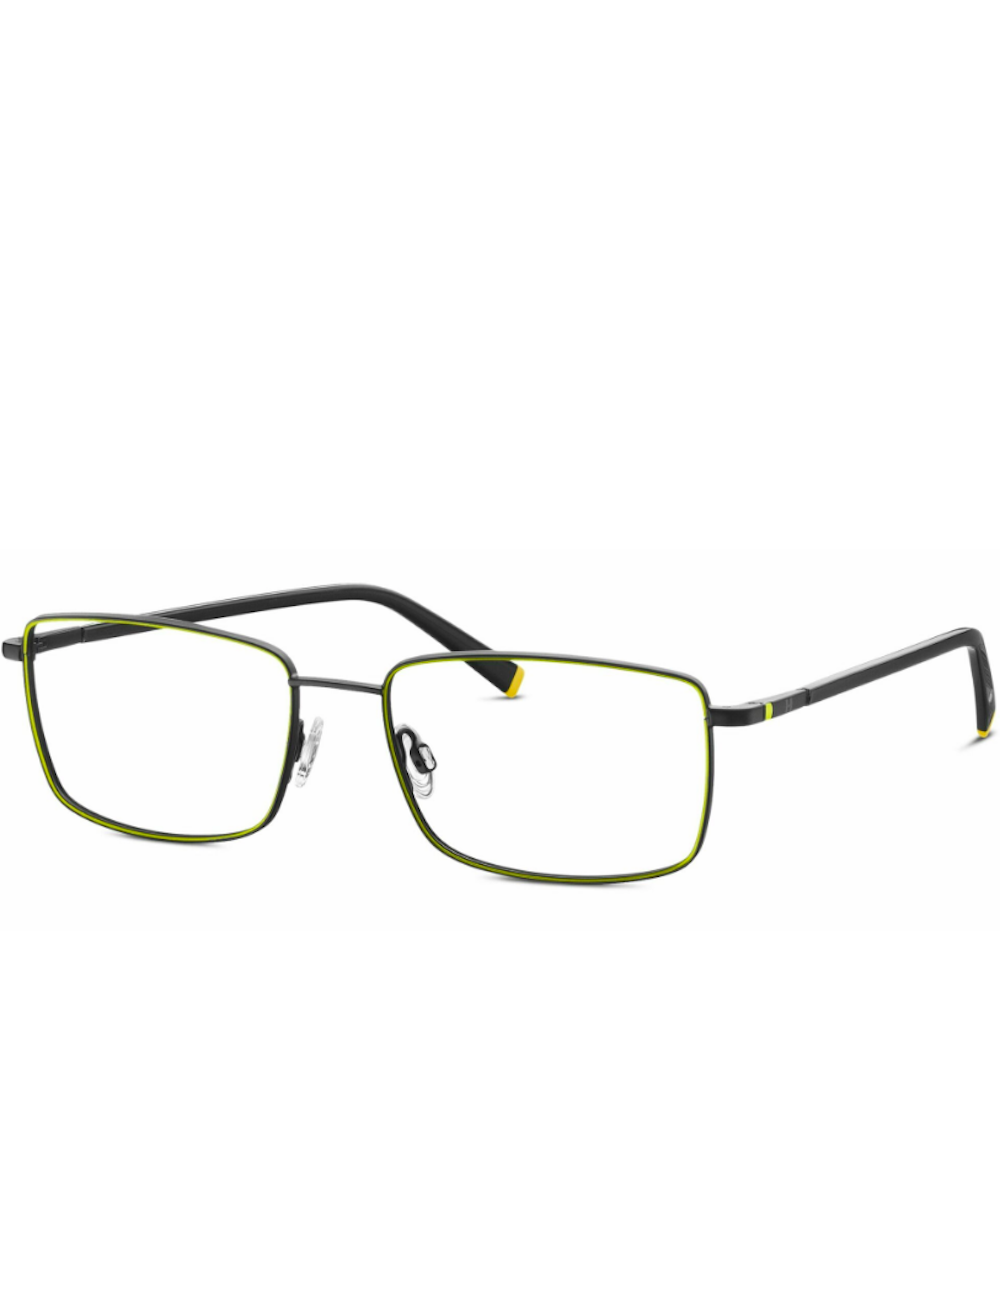 Humphrey's eyewear 582356 18 rectangular eyeglasses